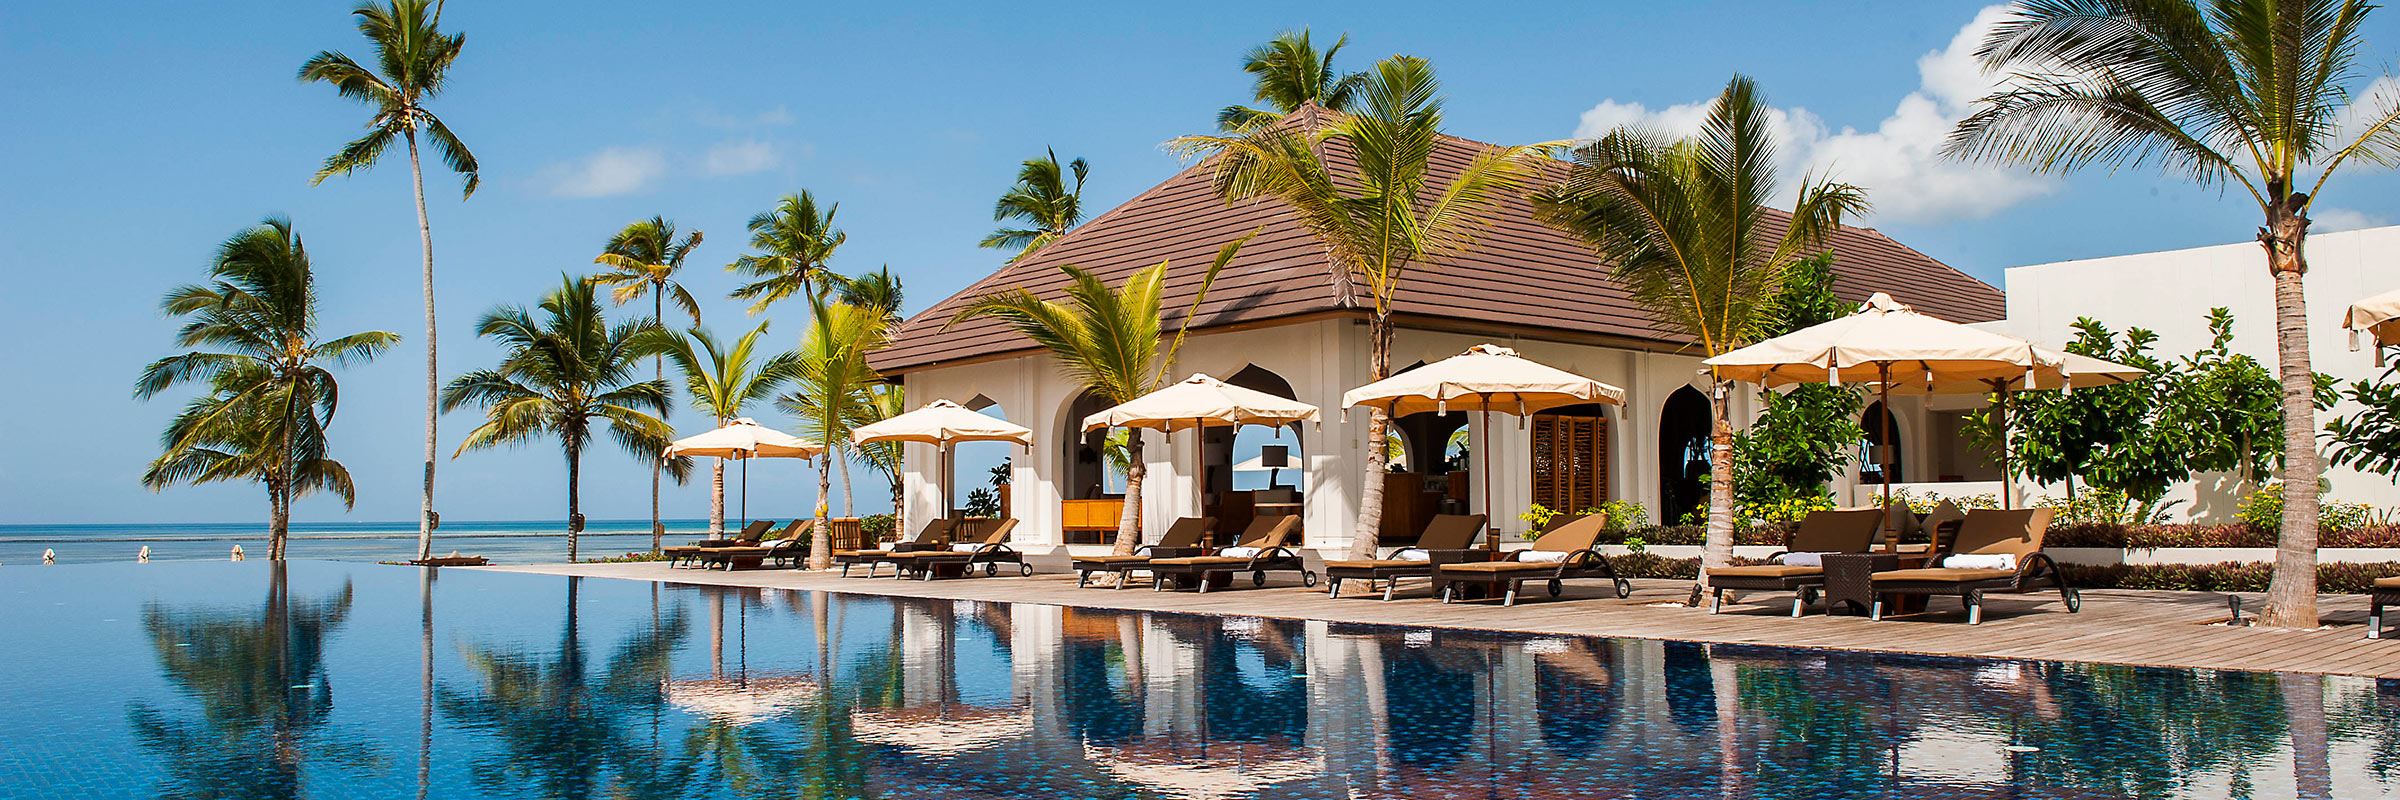 The Palms | Hotels in Zanzibar Island | Audley Travel